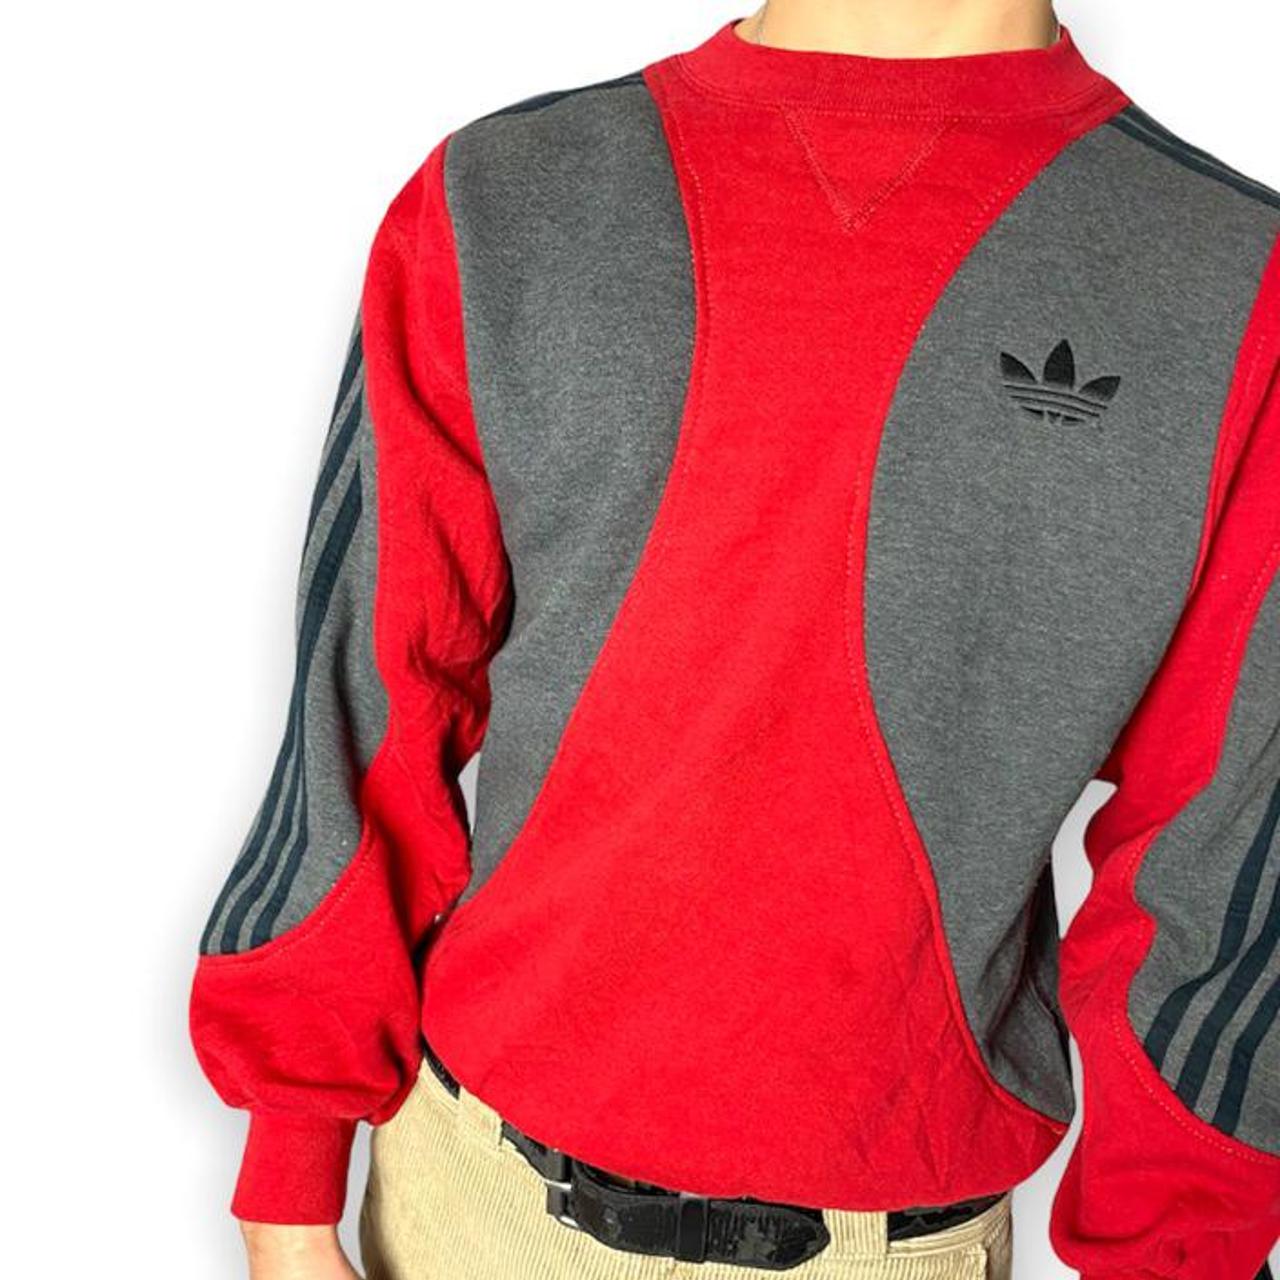 Adidas Men's Red and Grey Sweatshirt (2)